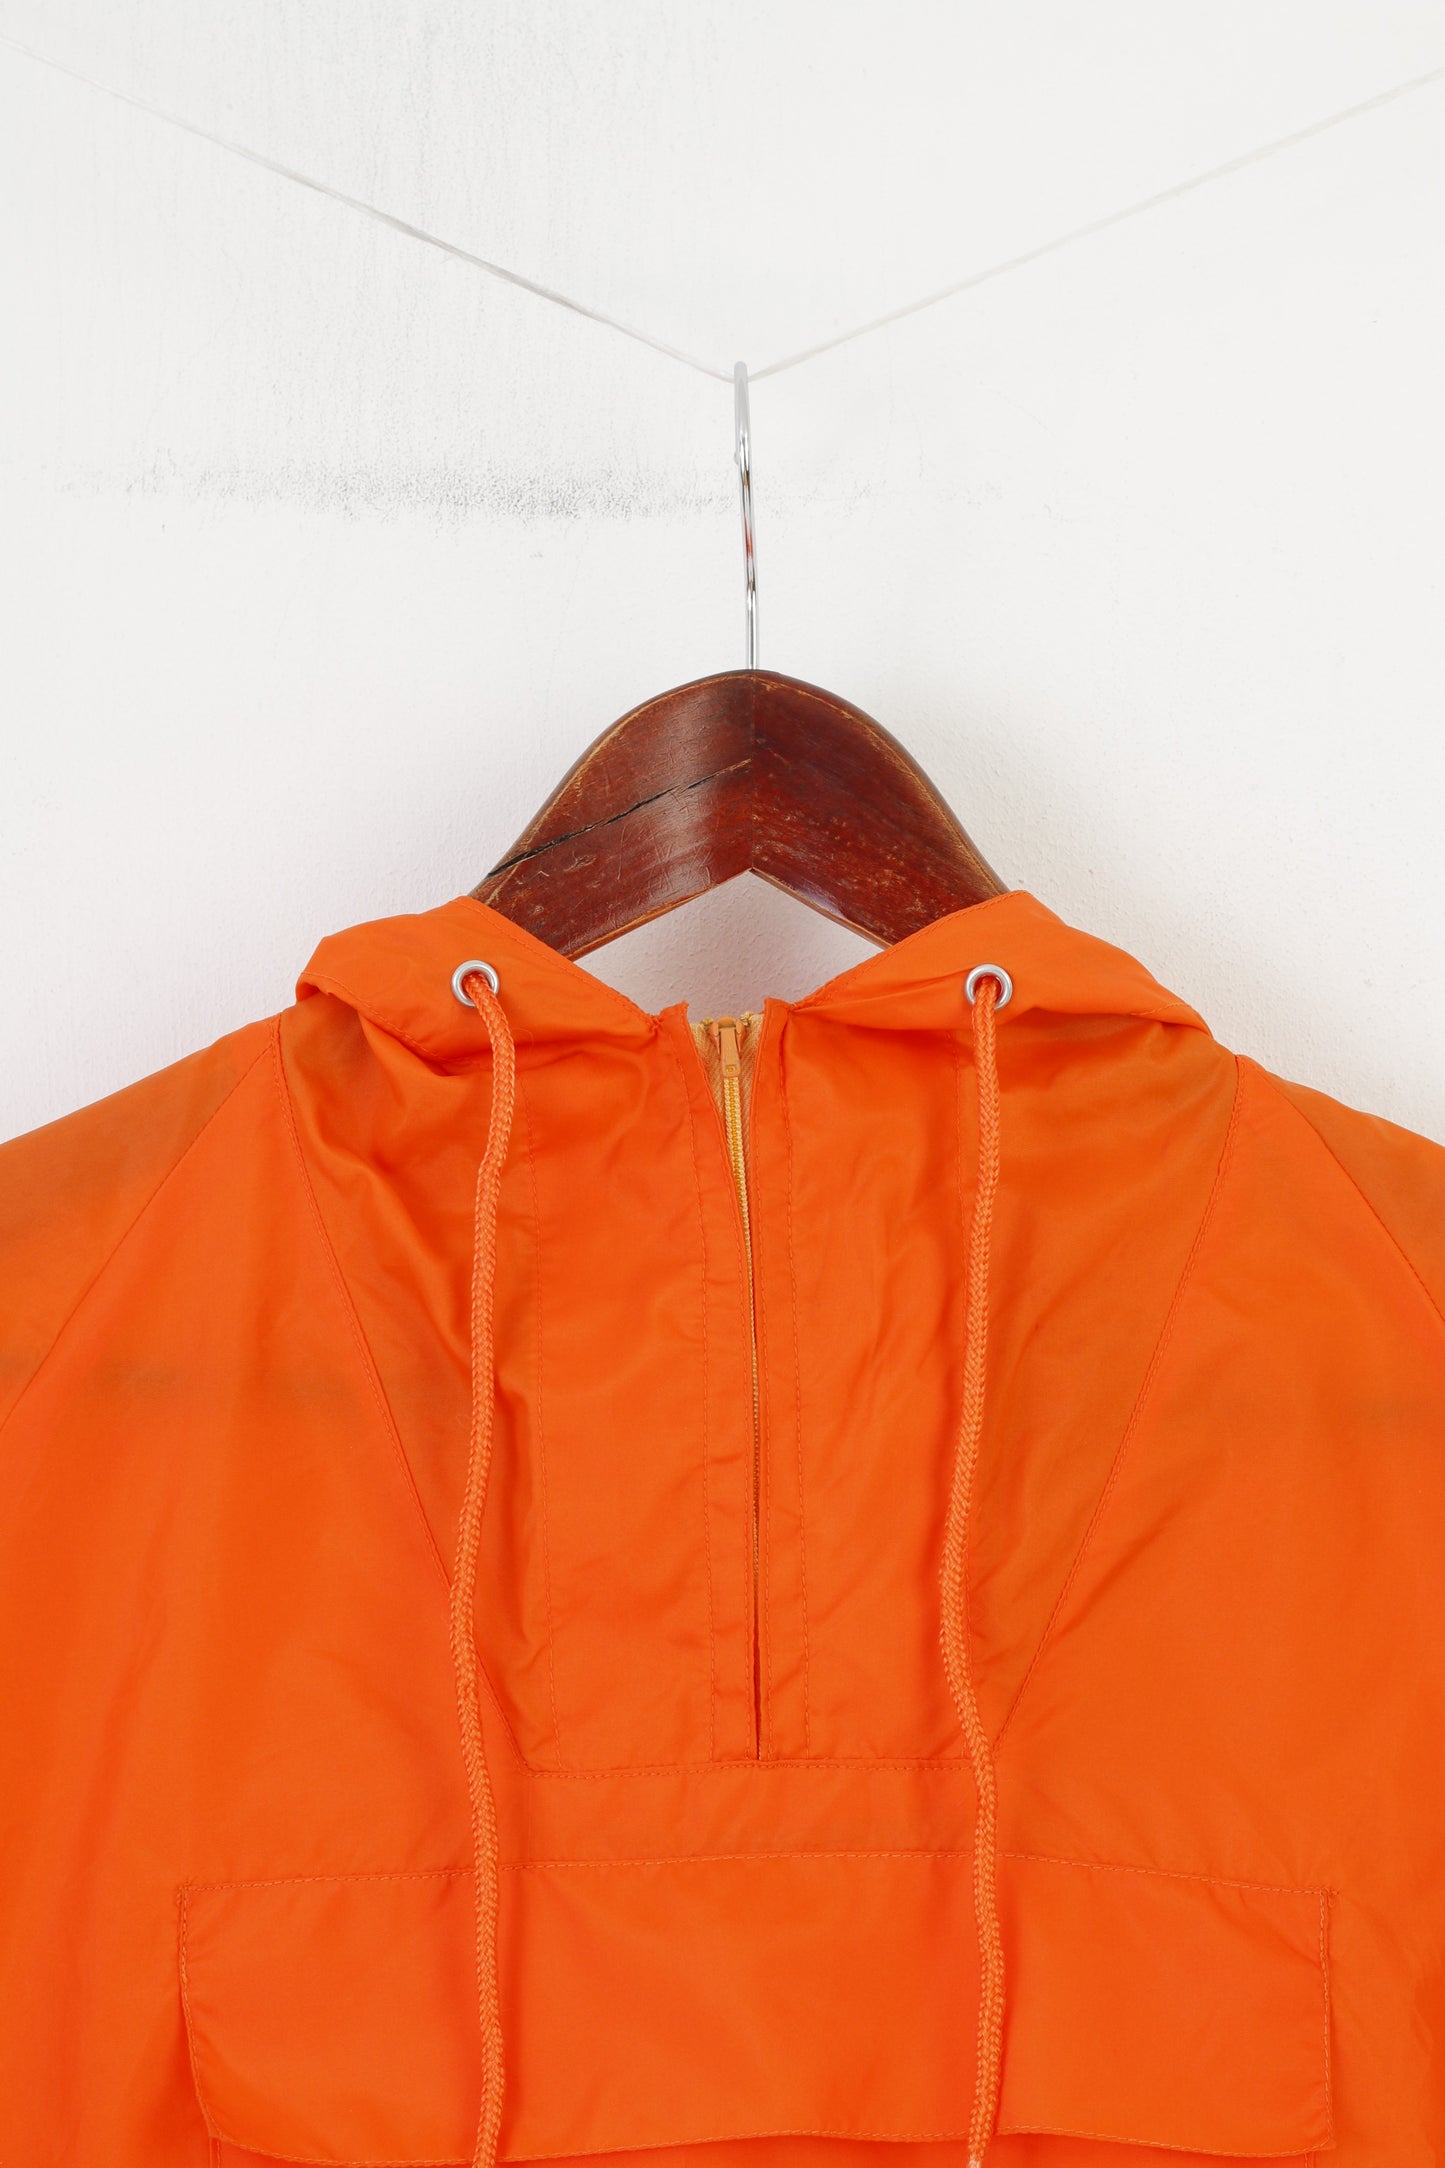 Klass Woman S Jacket Orange Waterproof Nylon Zip Neck Hood Pocket Outwear Top